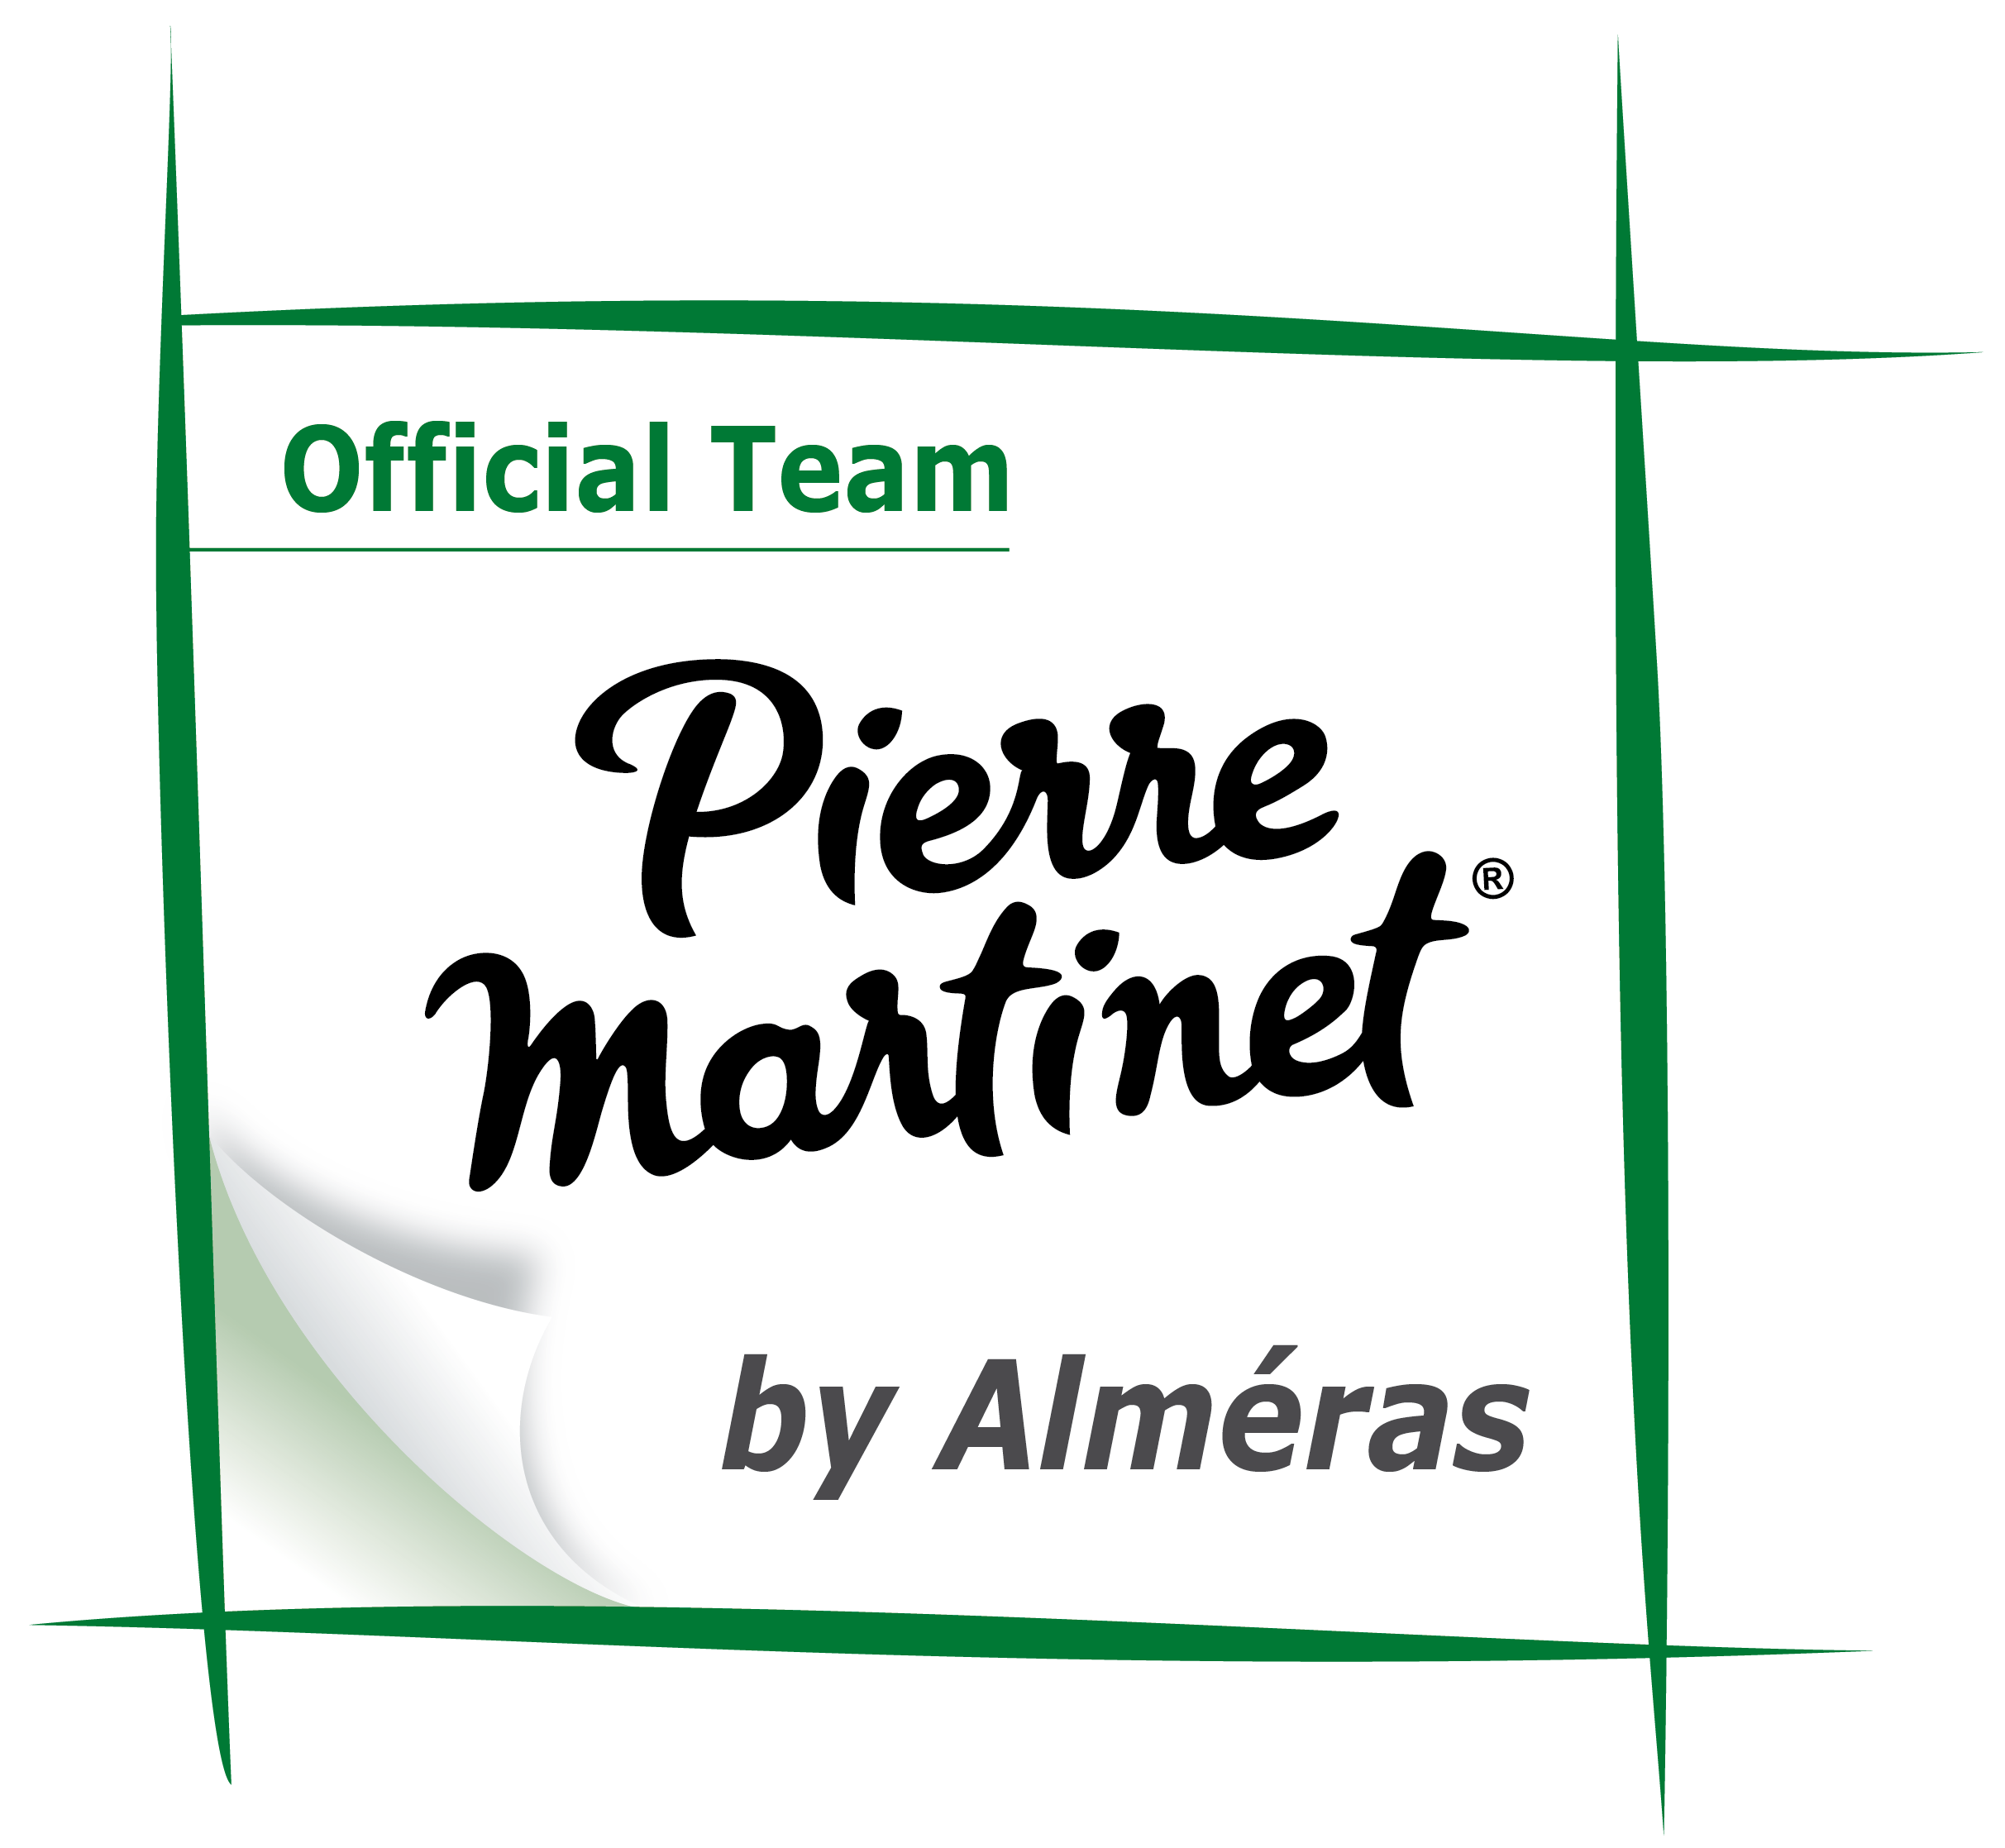 Martinet-by-Almeras-300.png